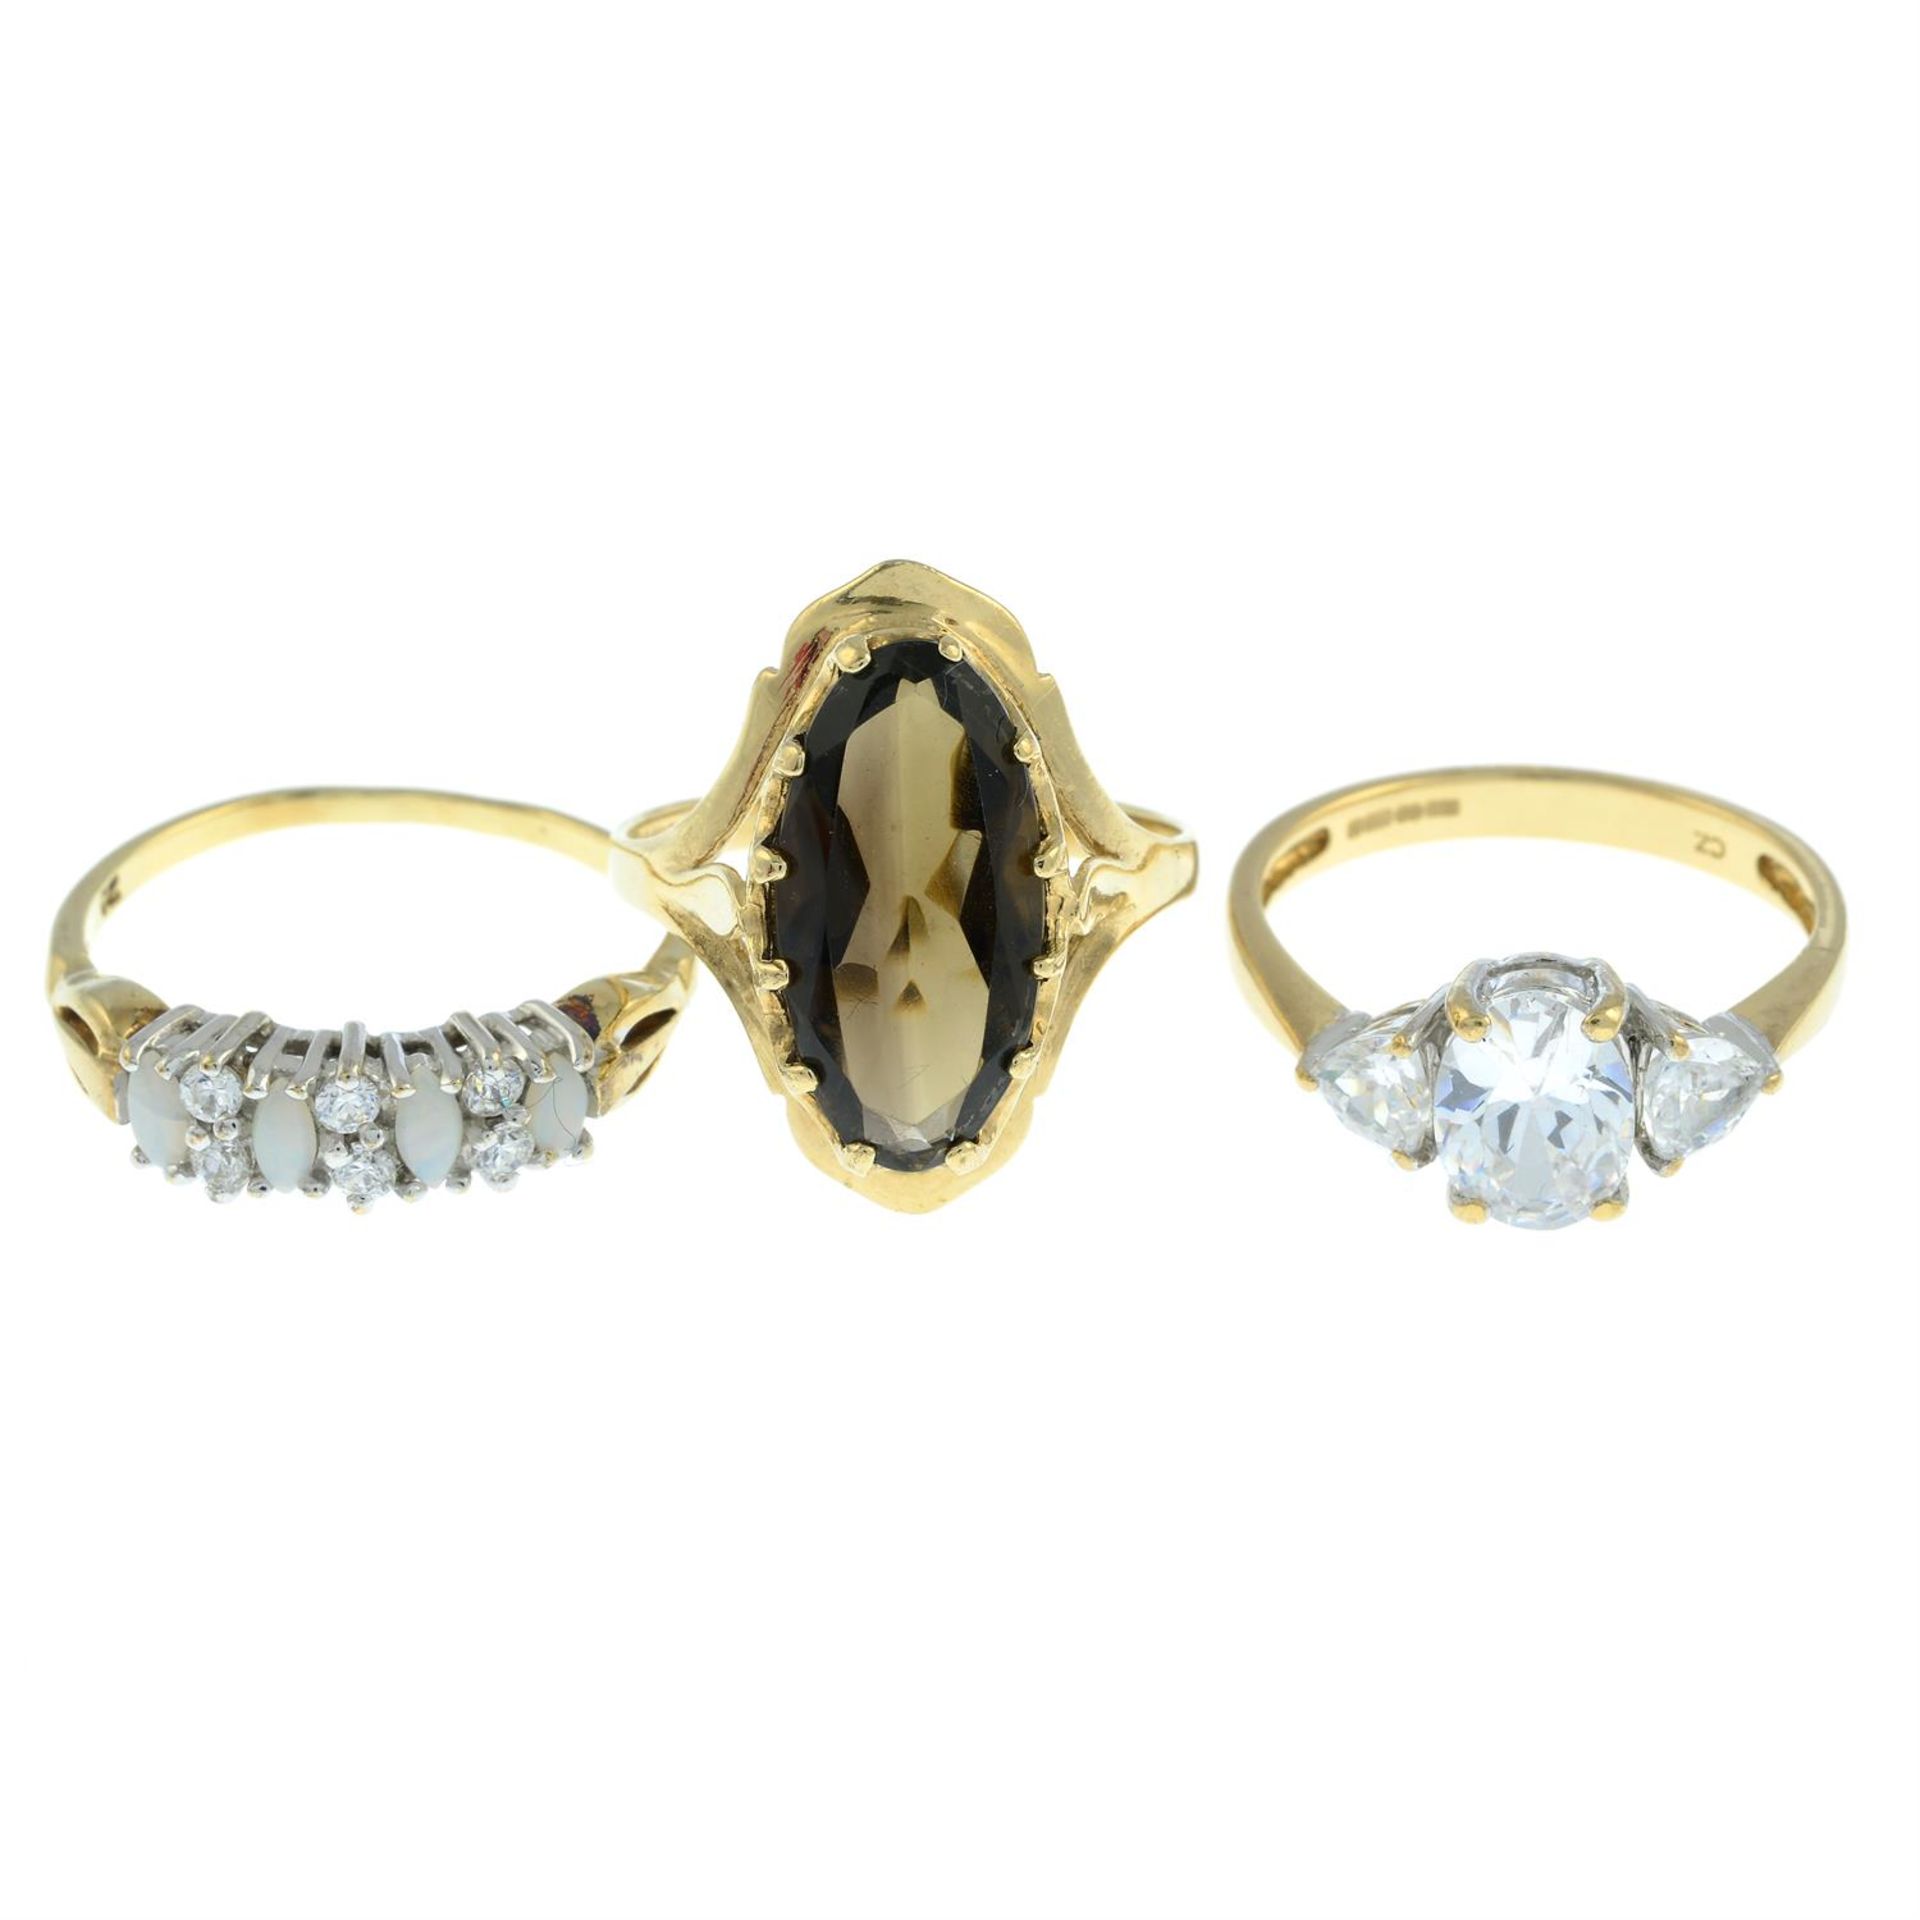 Three 9ct gold gem-set rings.